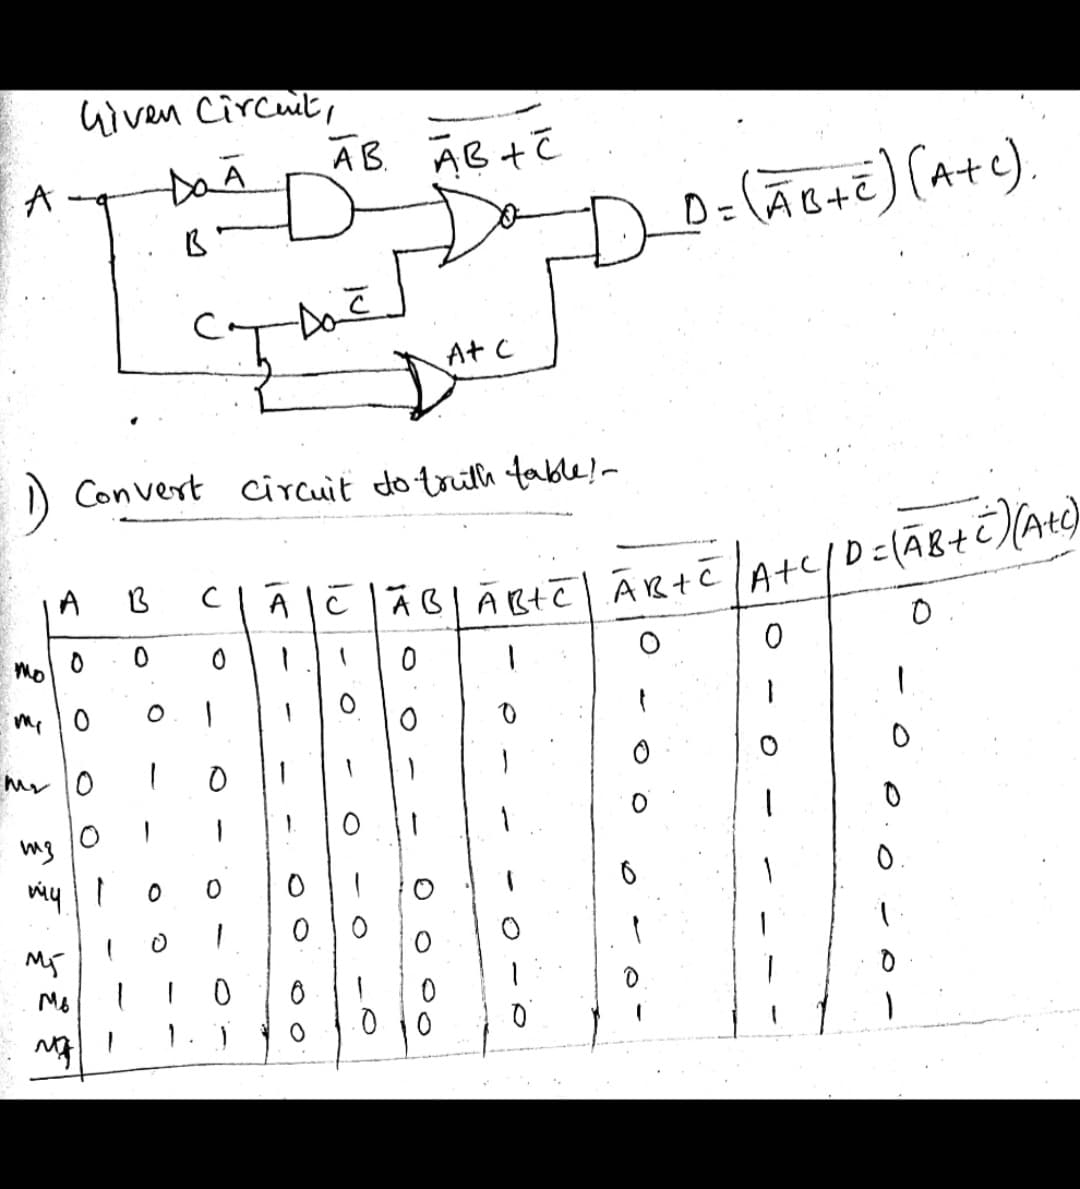 Wiven Circut,
AB AB +C
Do
At C
) Convert circuit do trith table!-
A
AtC
Mo
My 0
mg
O O Oo
